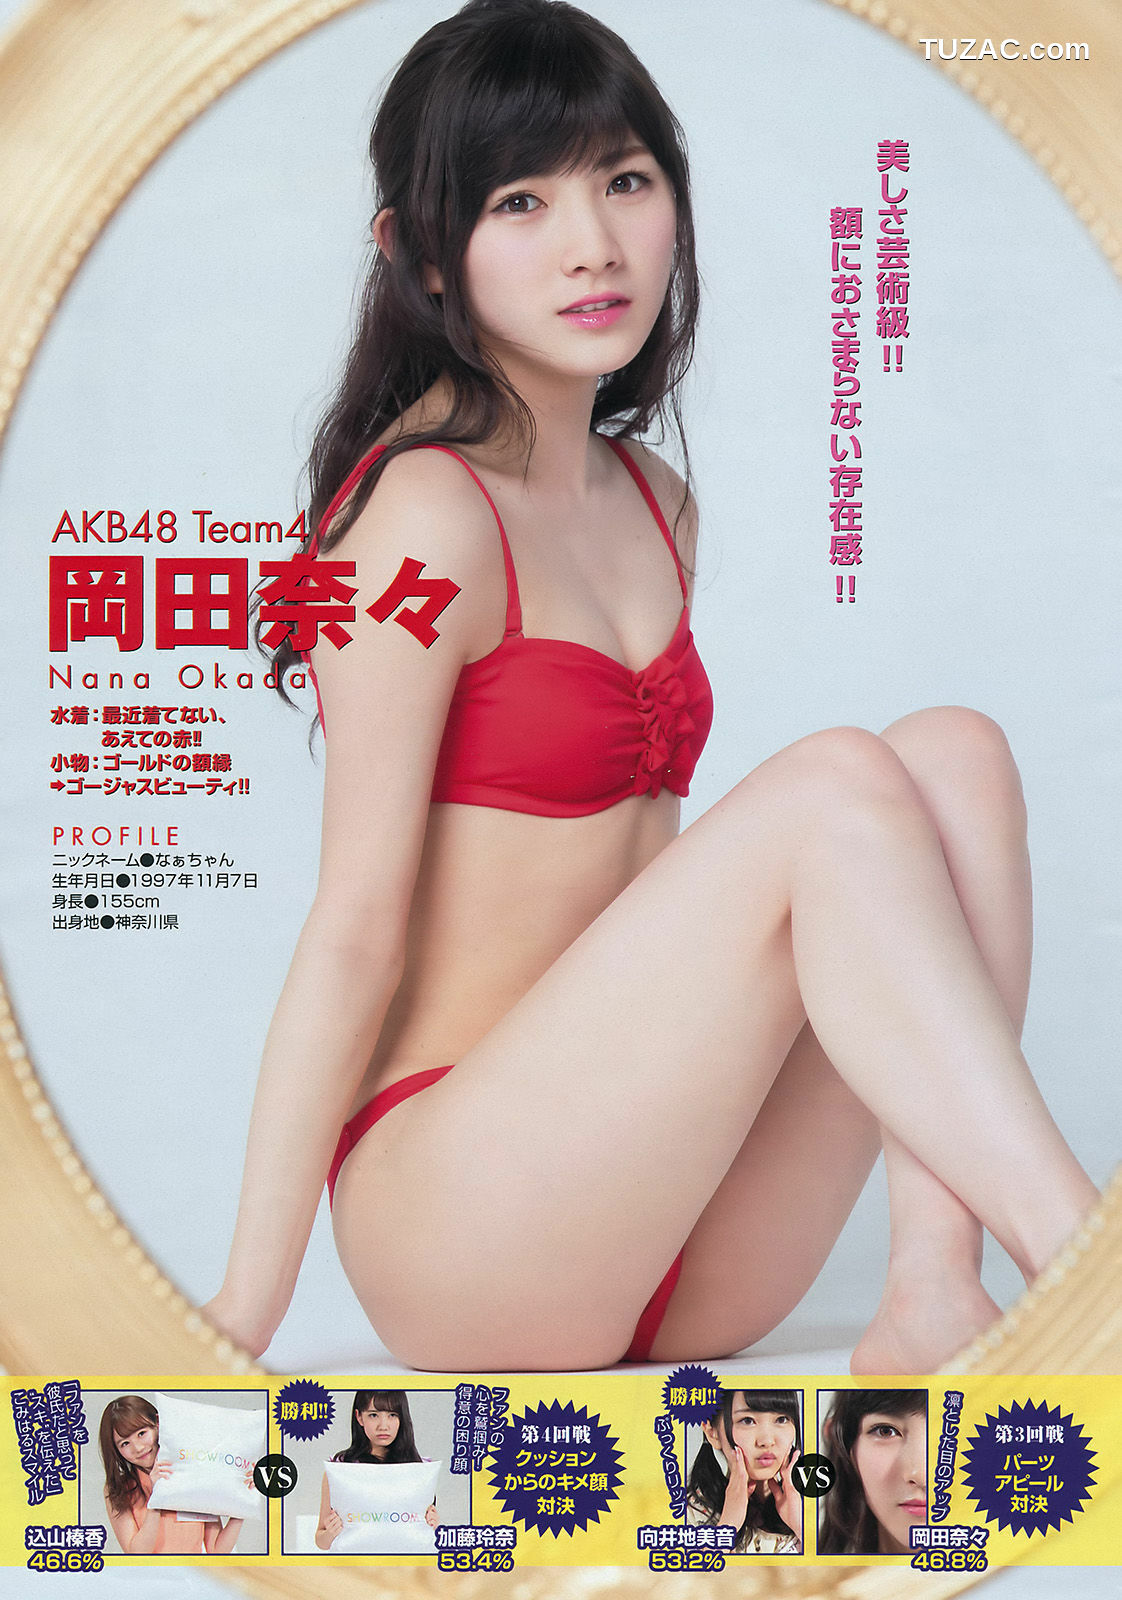 Young Magazine杂志写真_ 久松郁実 2016年No.21-22 写真杂志[13P]